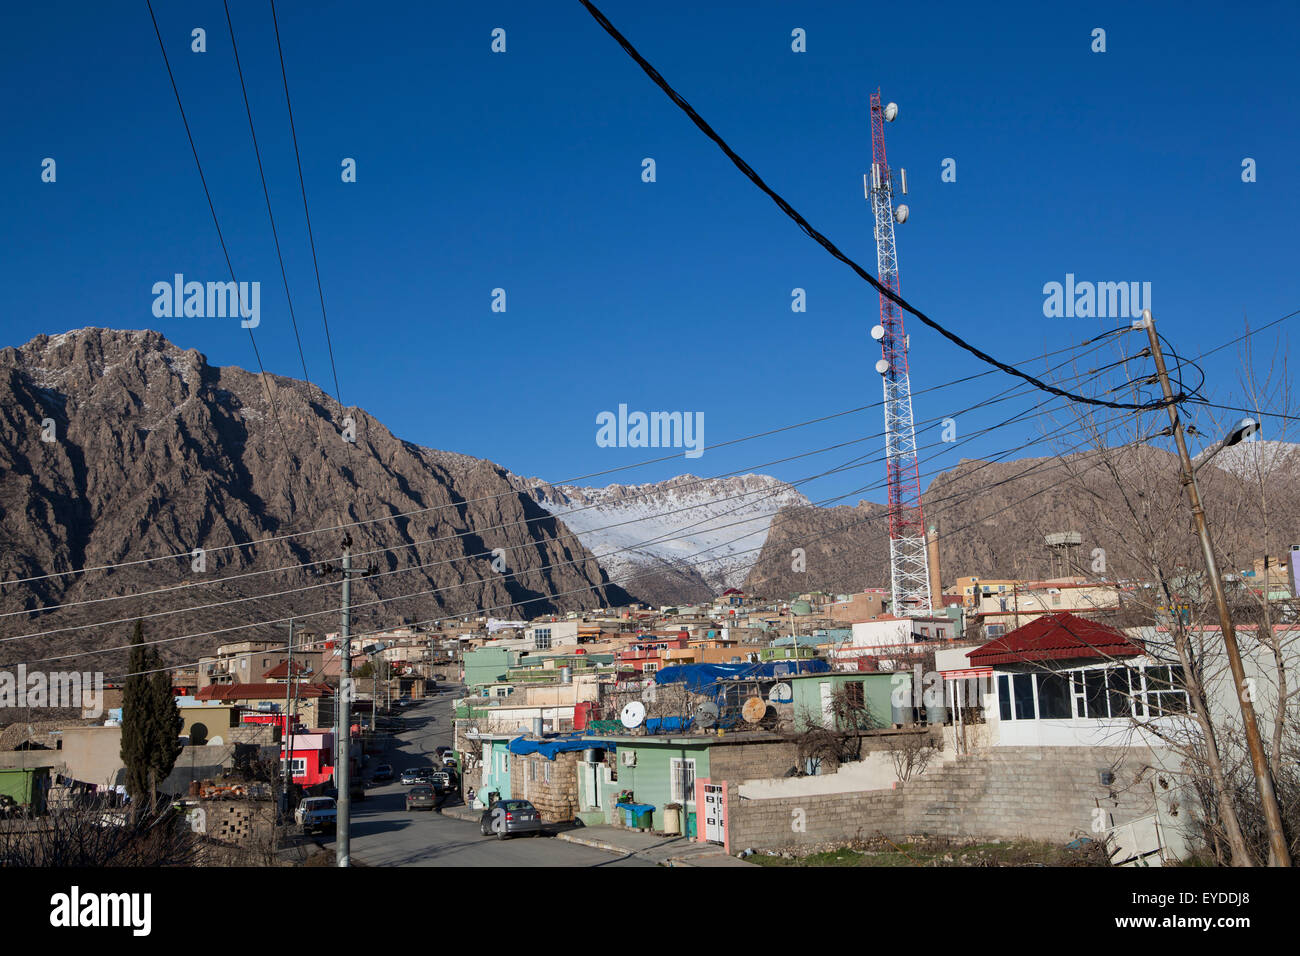 Details Of The Hilltop Village Of Amadiya, Iraqi Kurdistan, Iraq Stock Photo